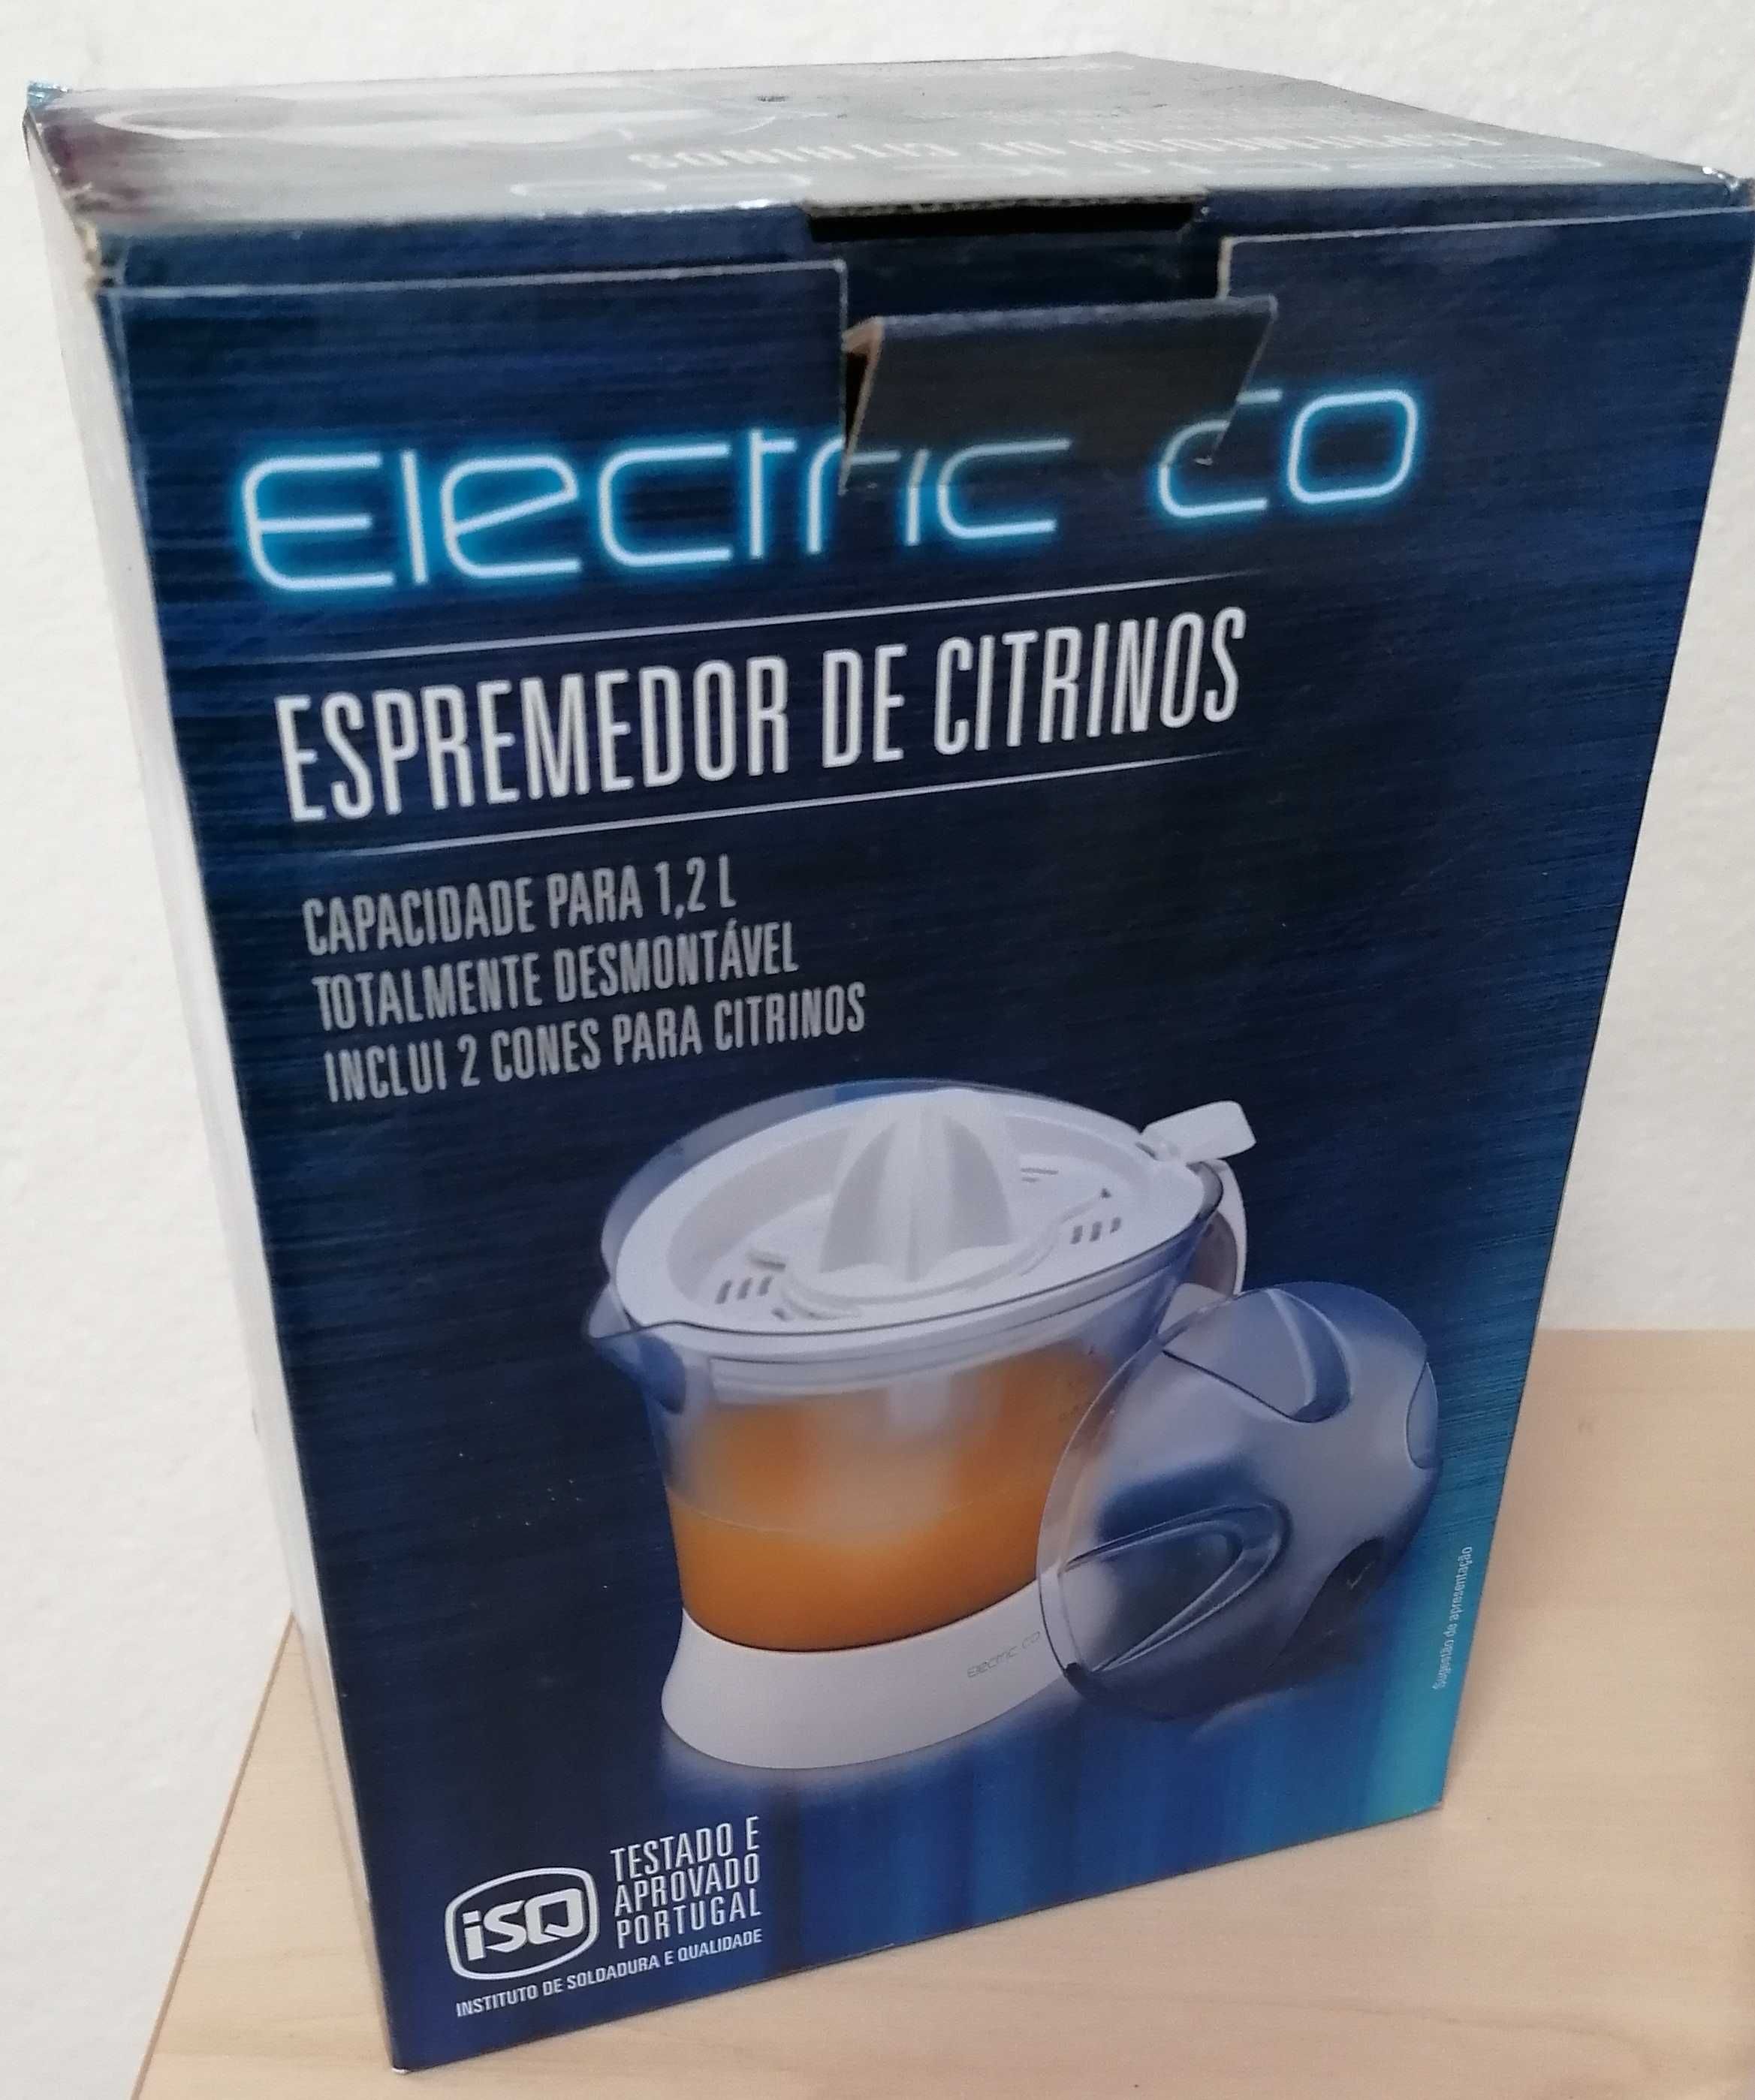 Espremedor de citrinos, "Electric co", por 5€